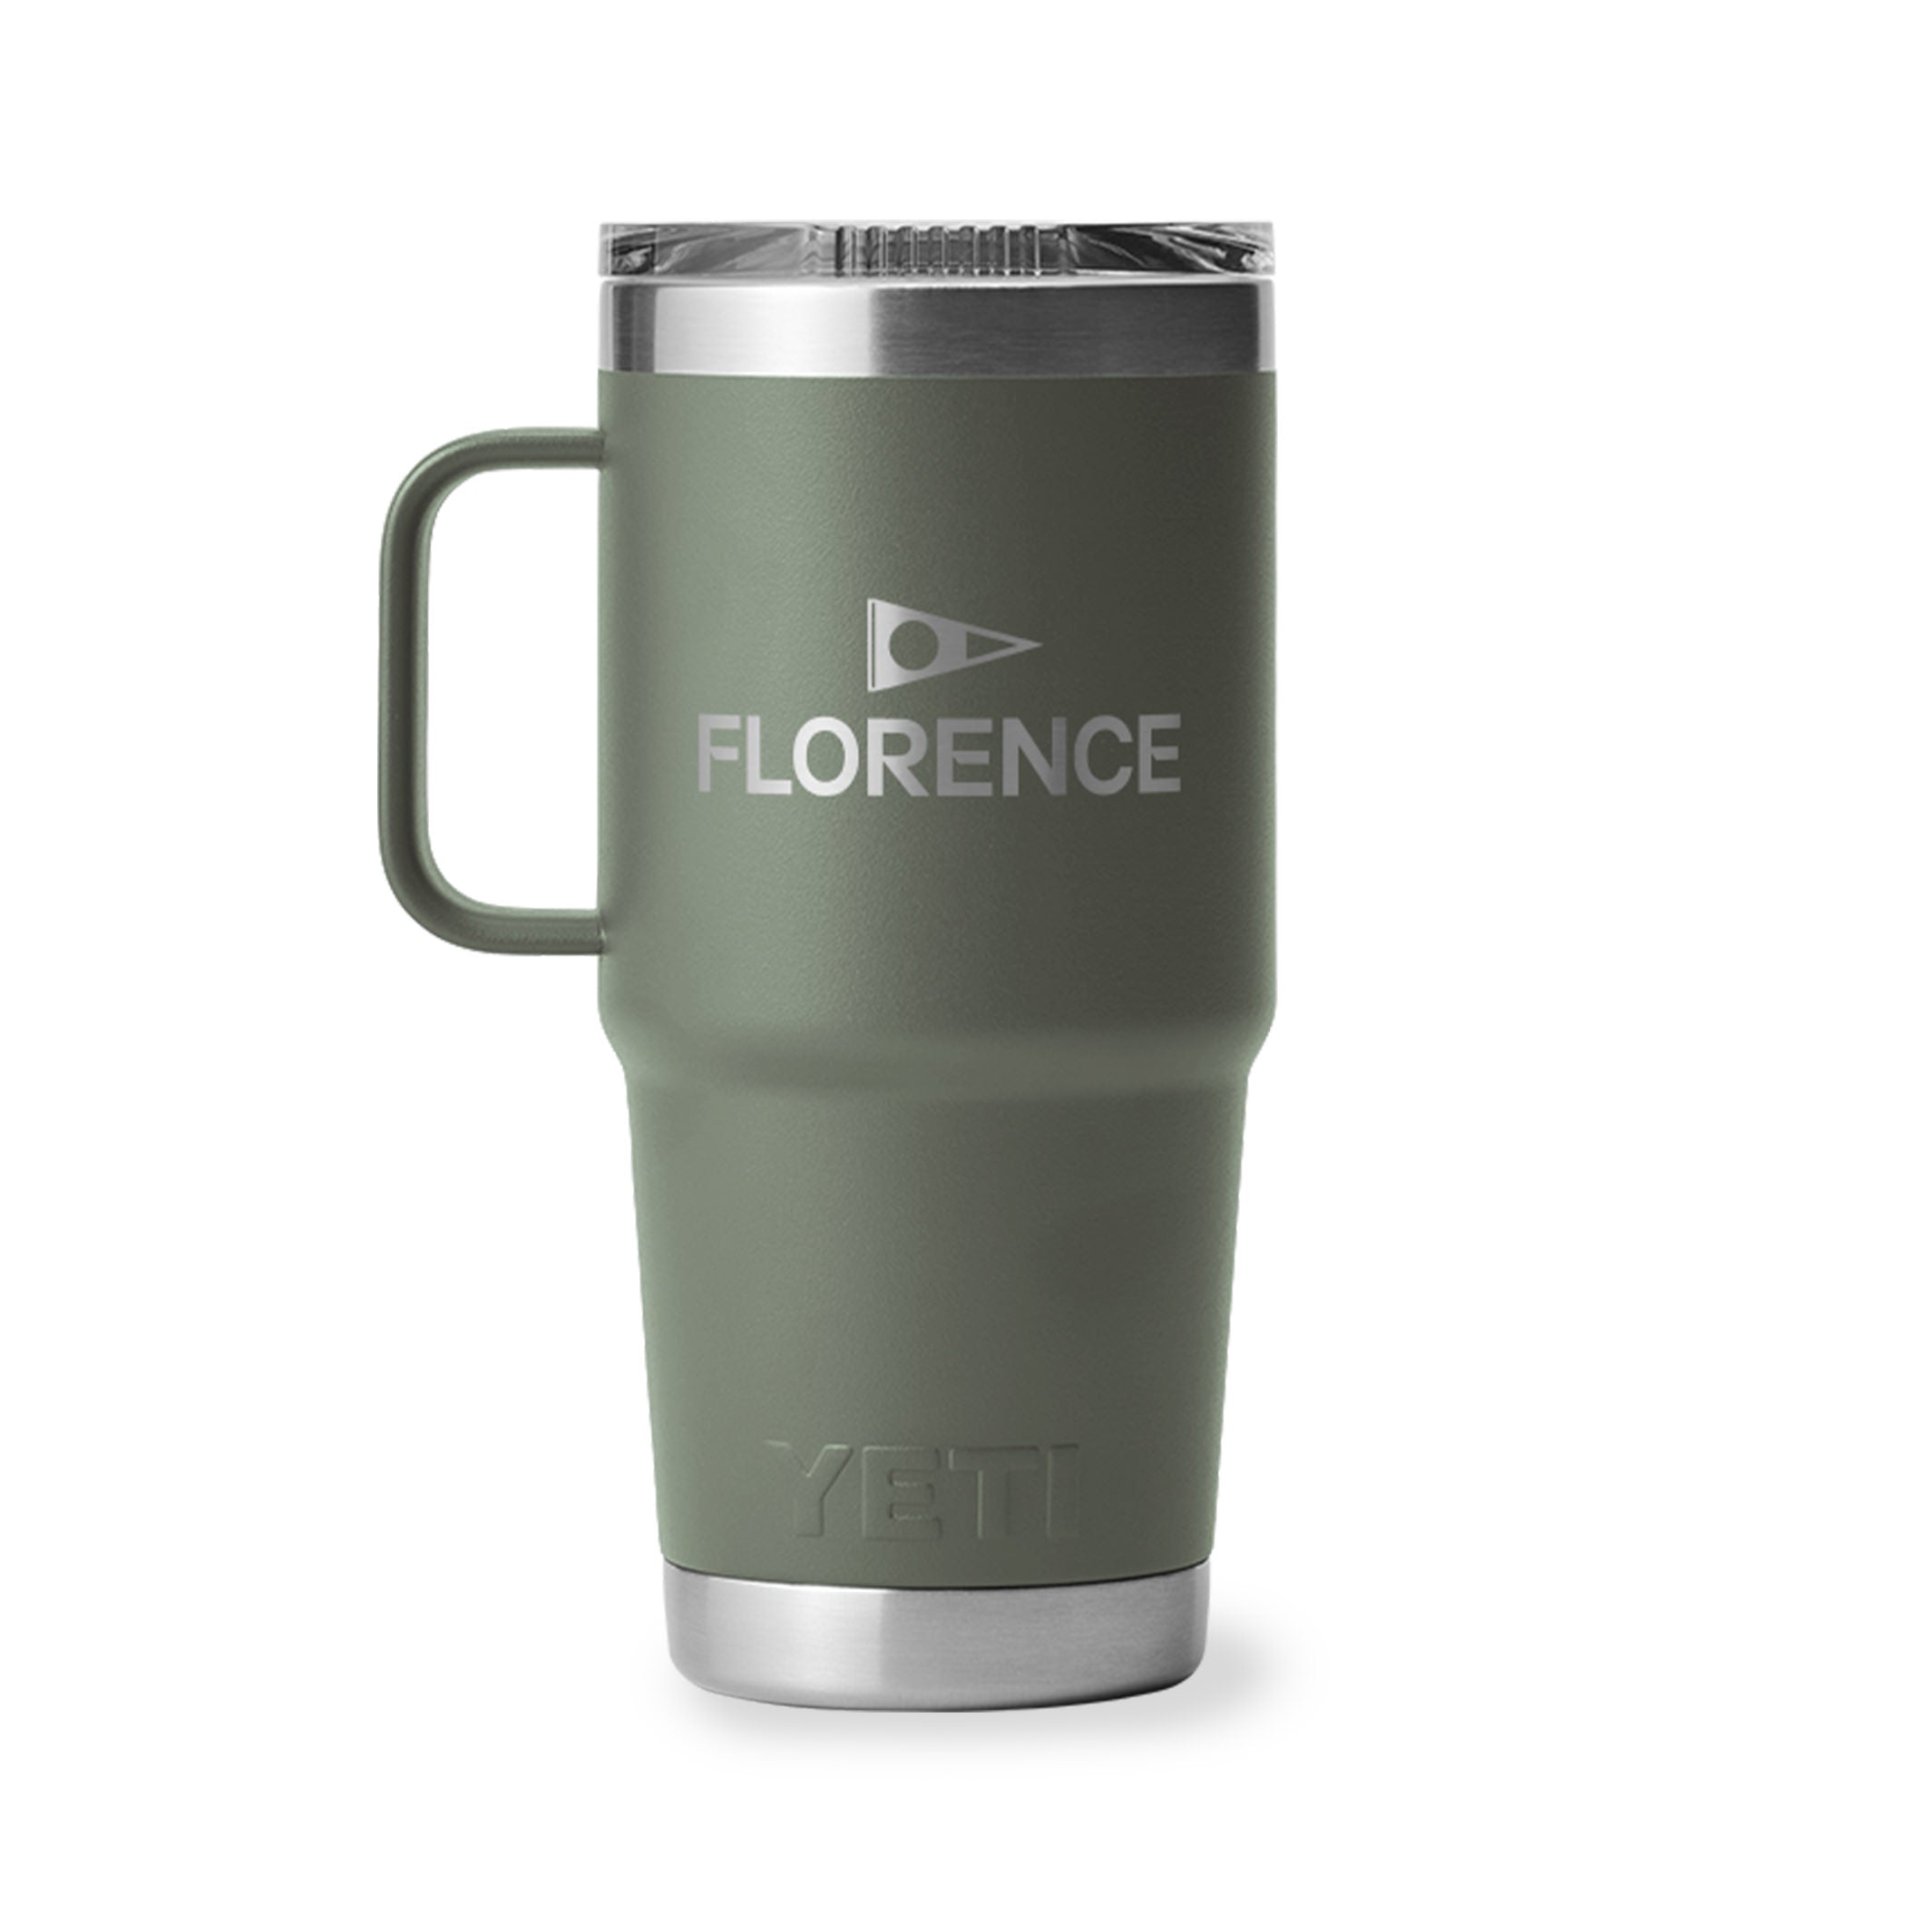 20 oz stainless steel coffee mug